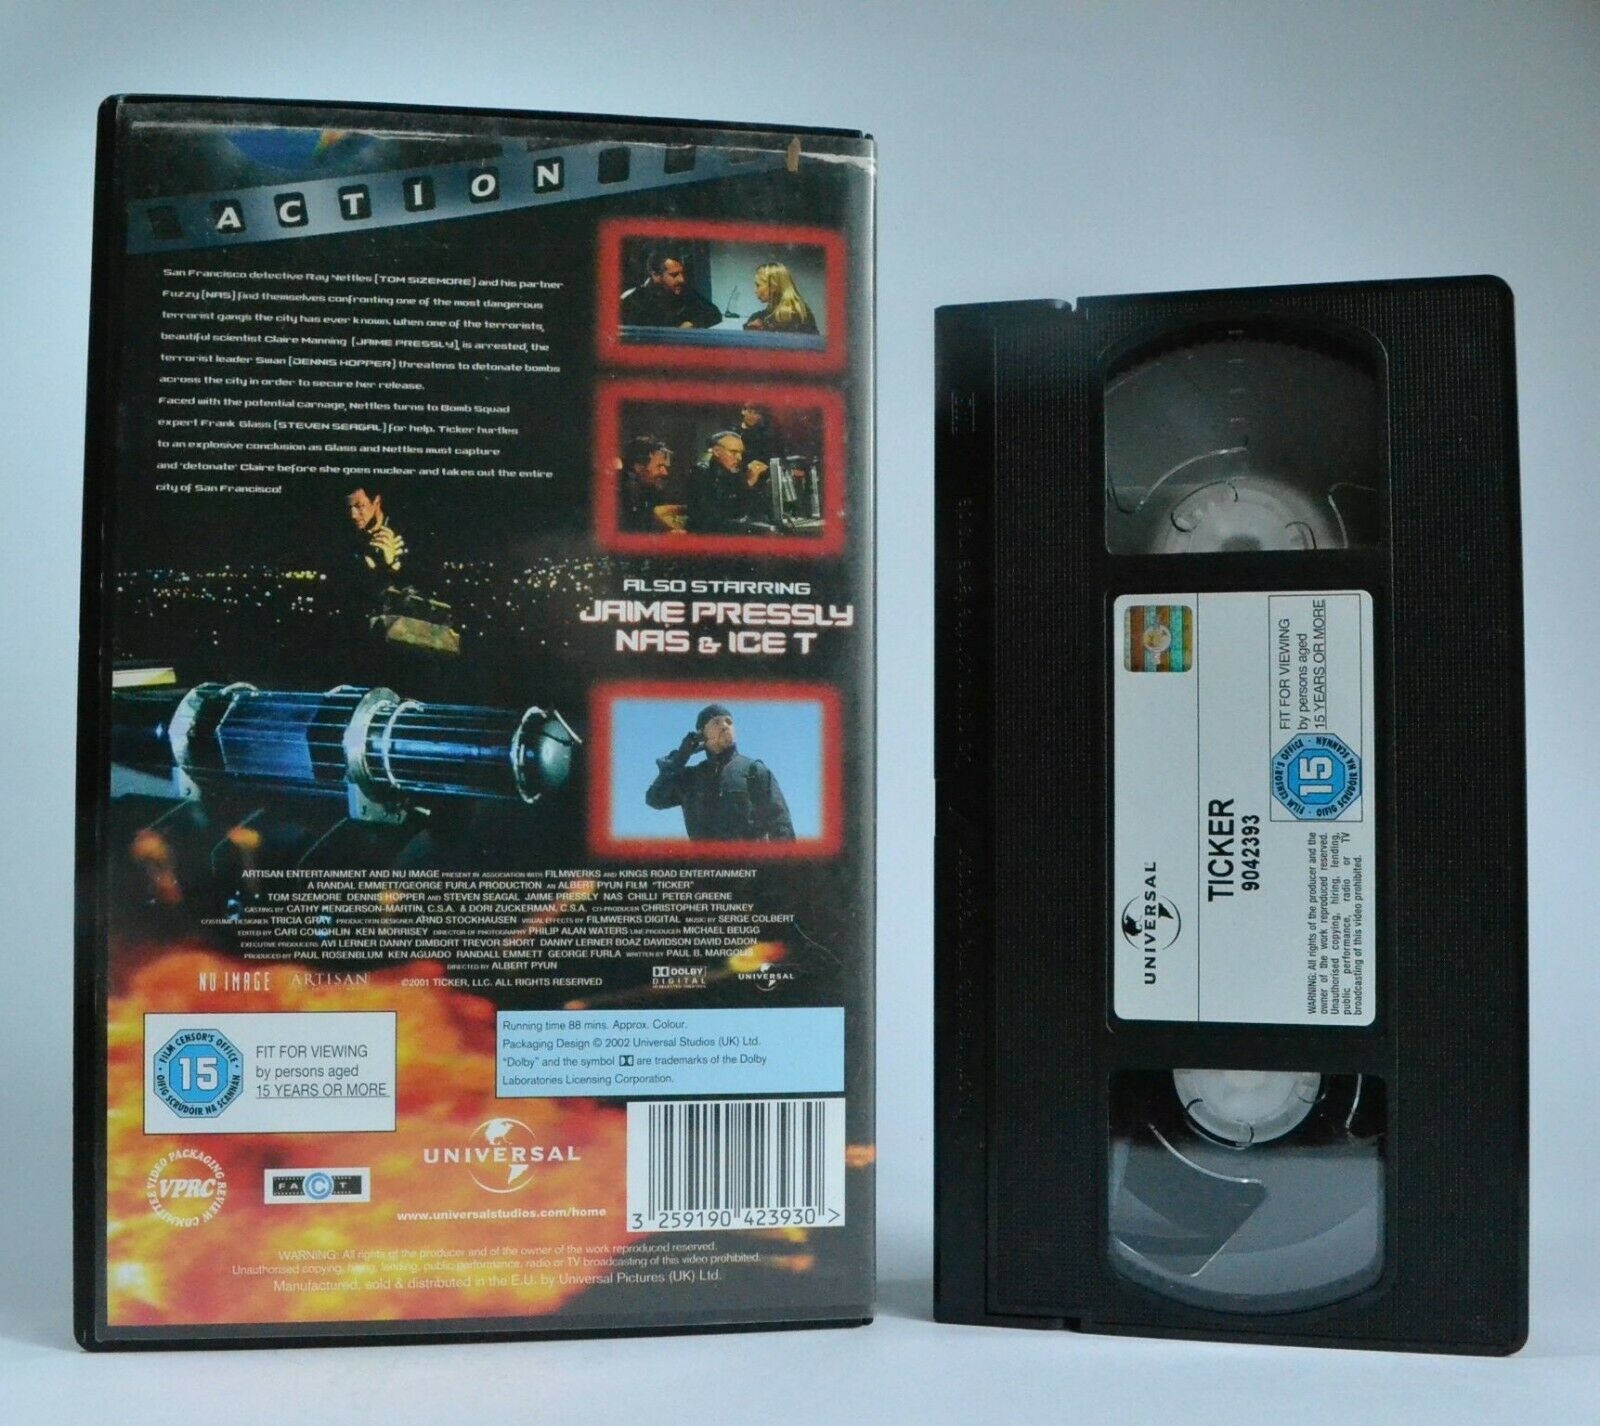 Ticker (2001) - Action - Large Box - Dennis Hopper/Steven Seagal - Pal VHS-